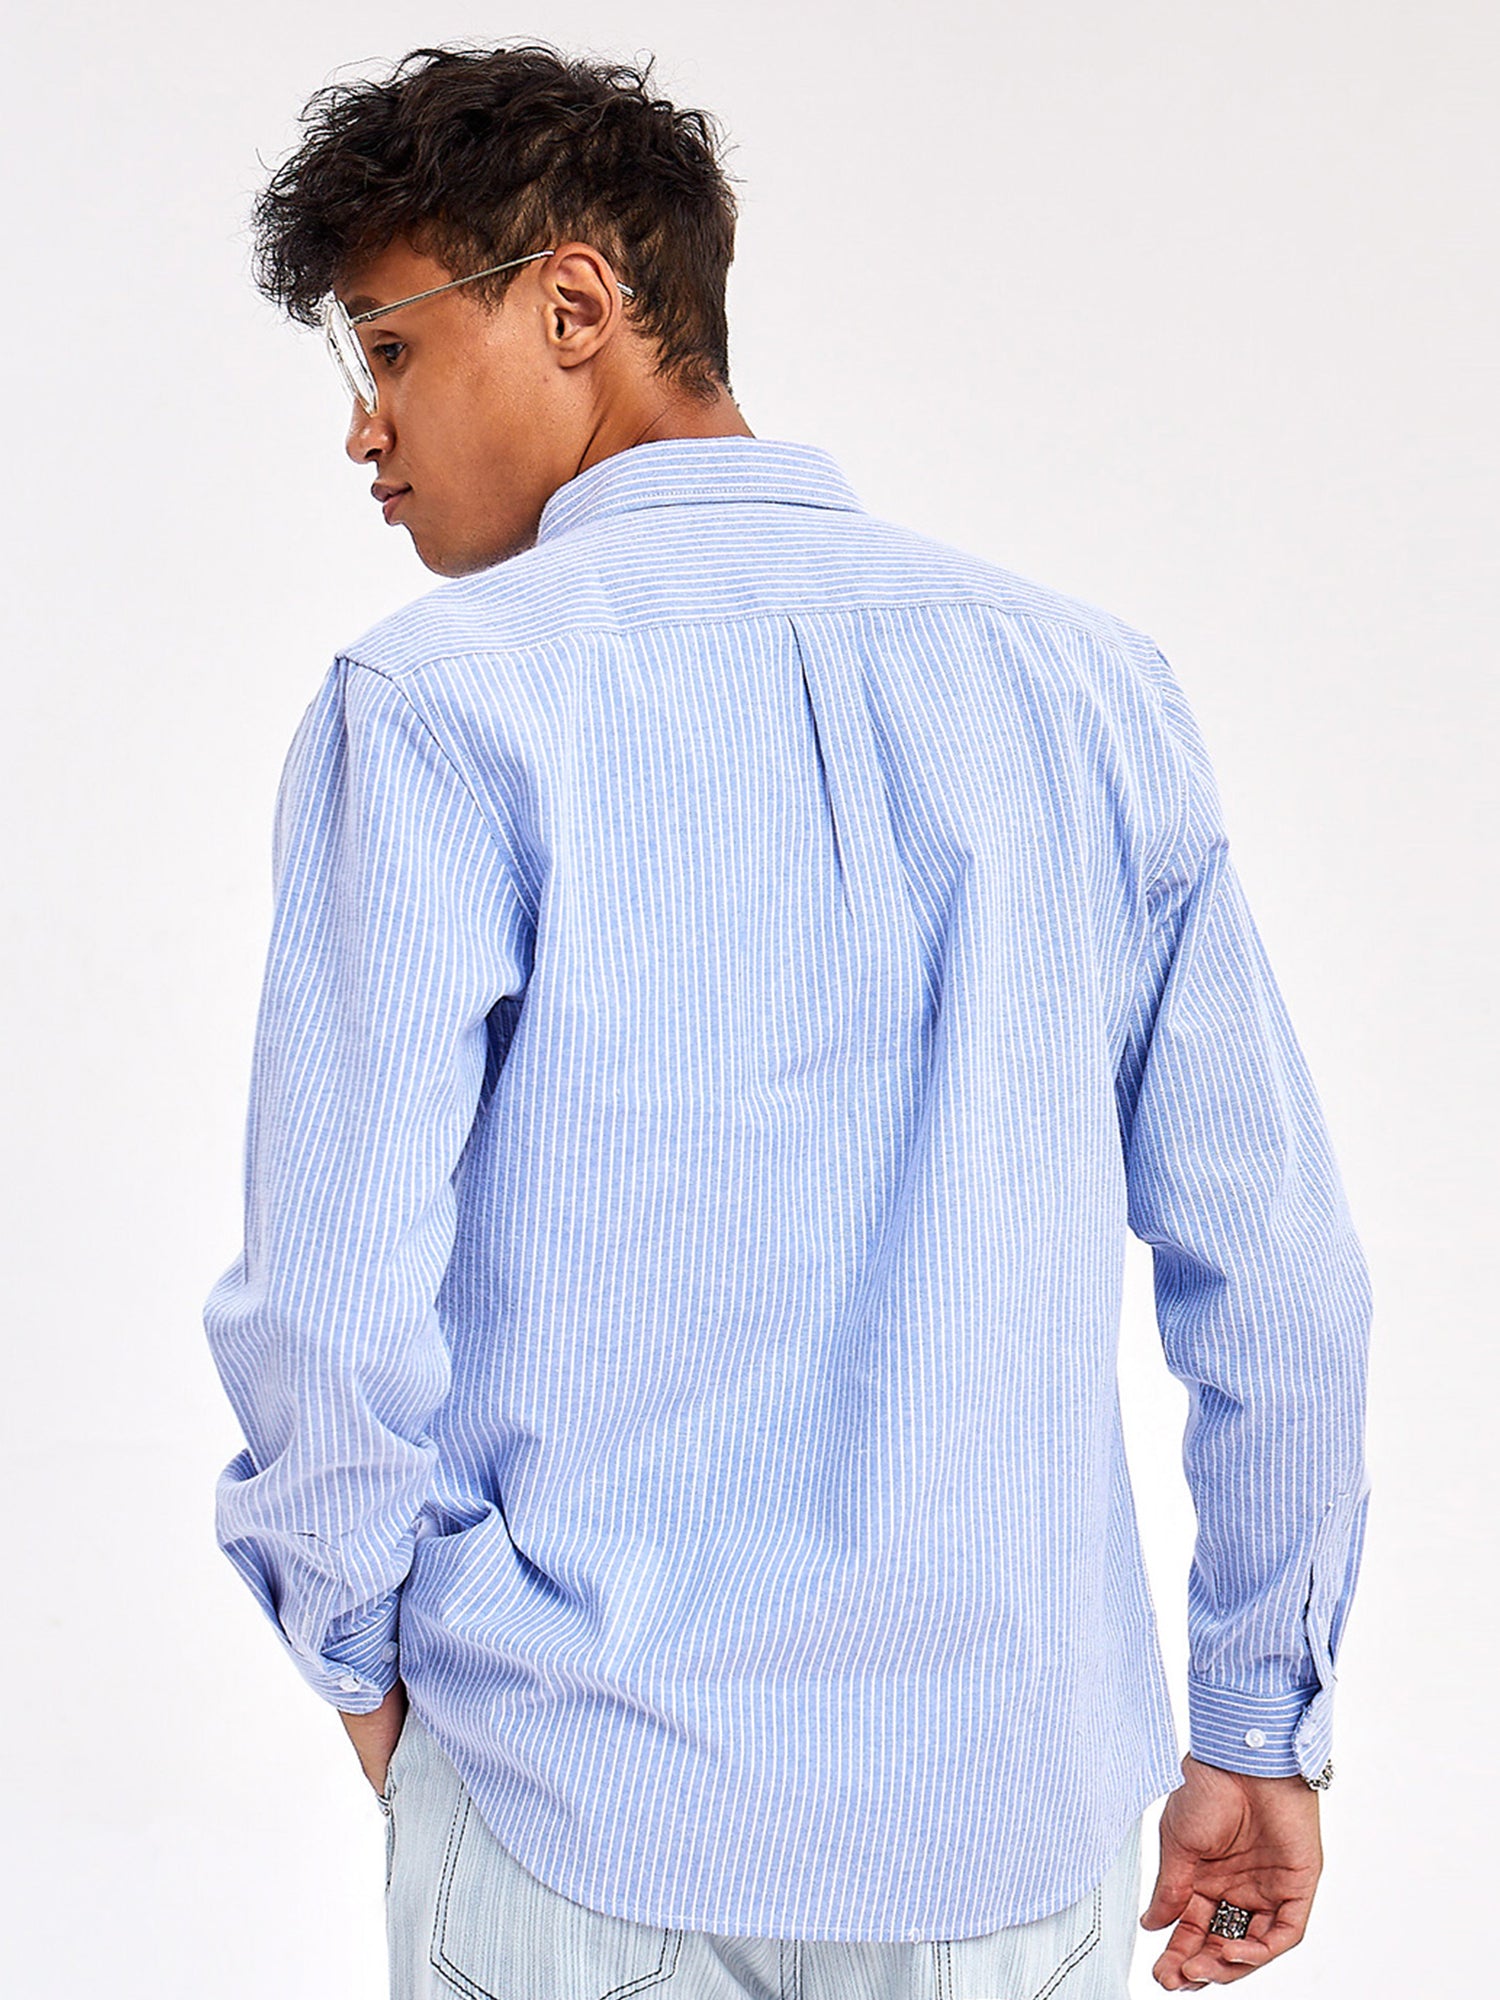 JUSTNOTAG Striped Oxford Textile Fabric Turn-down Collar Shirts